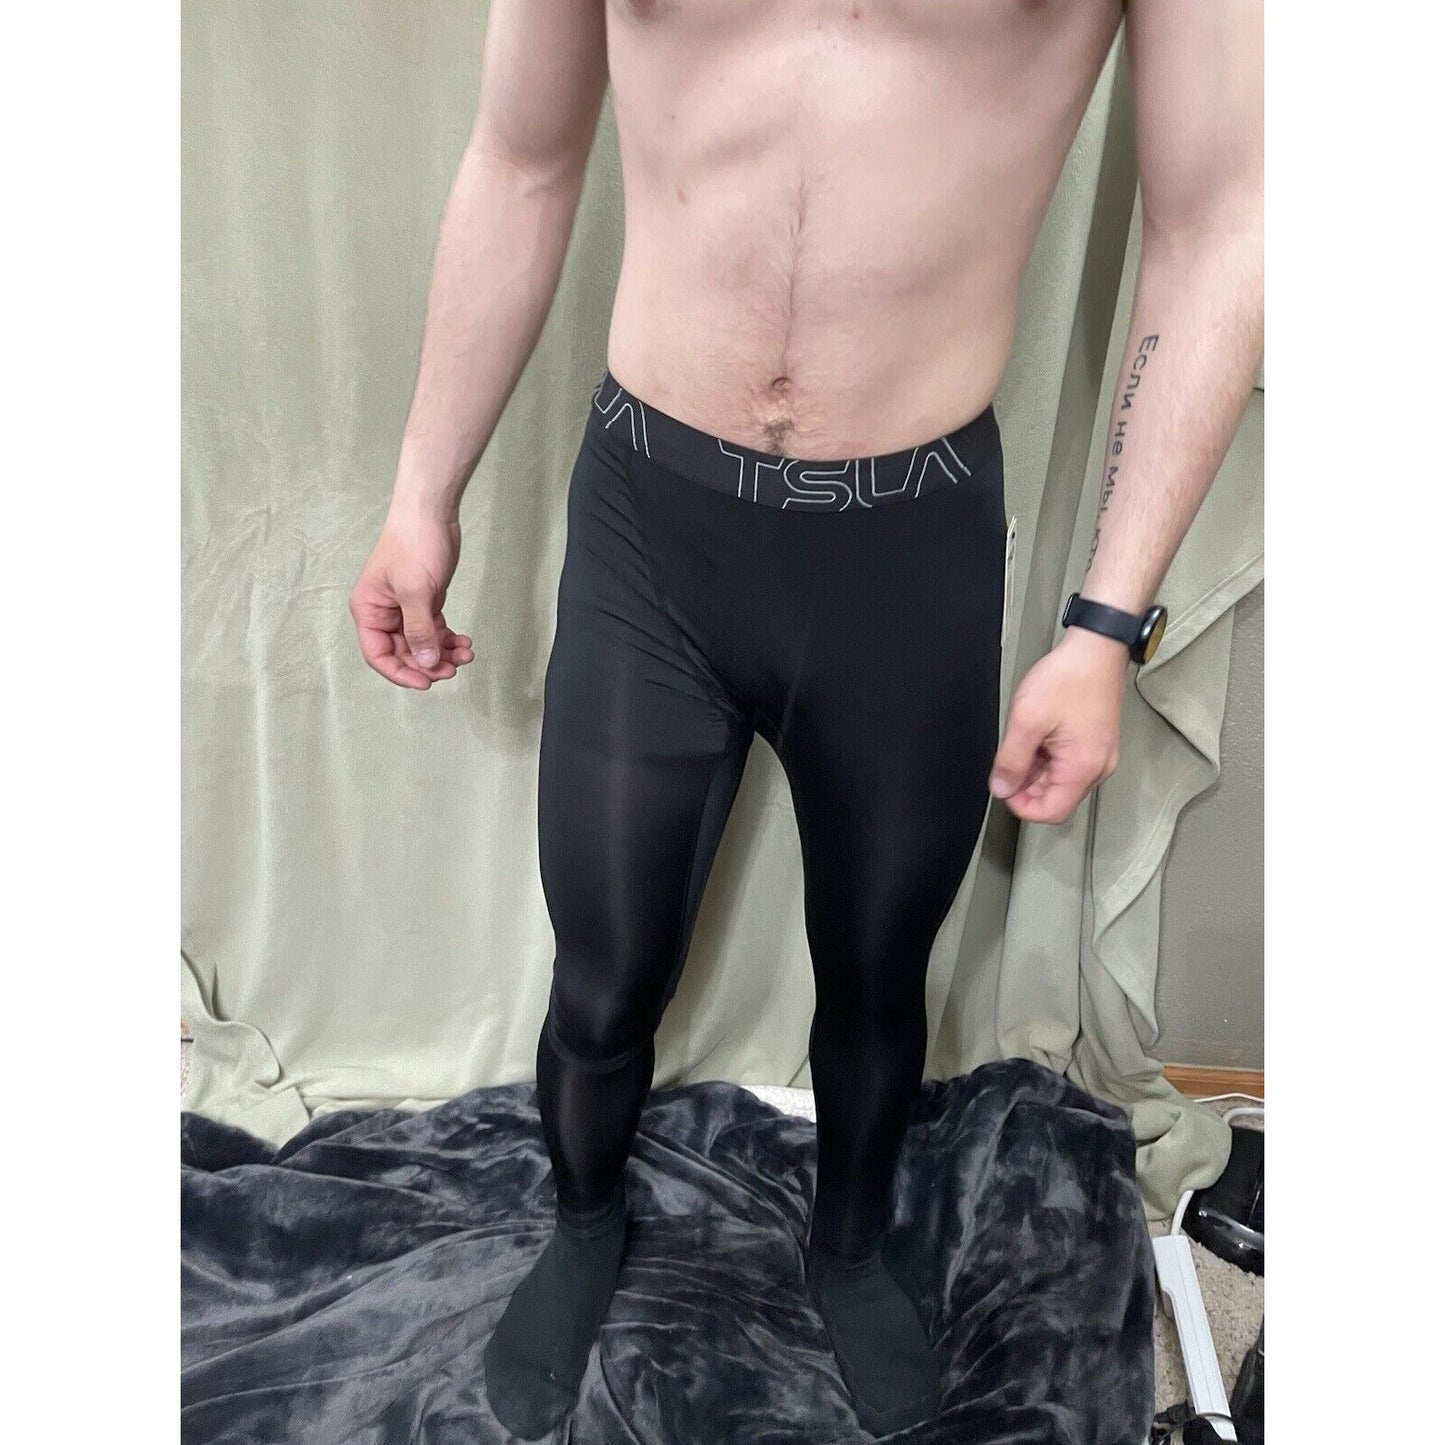 TSLA Men’s Medium Black Running Workout Base Layer Pants Compression